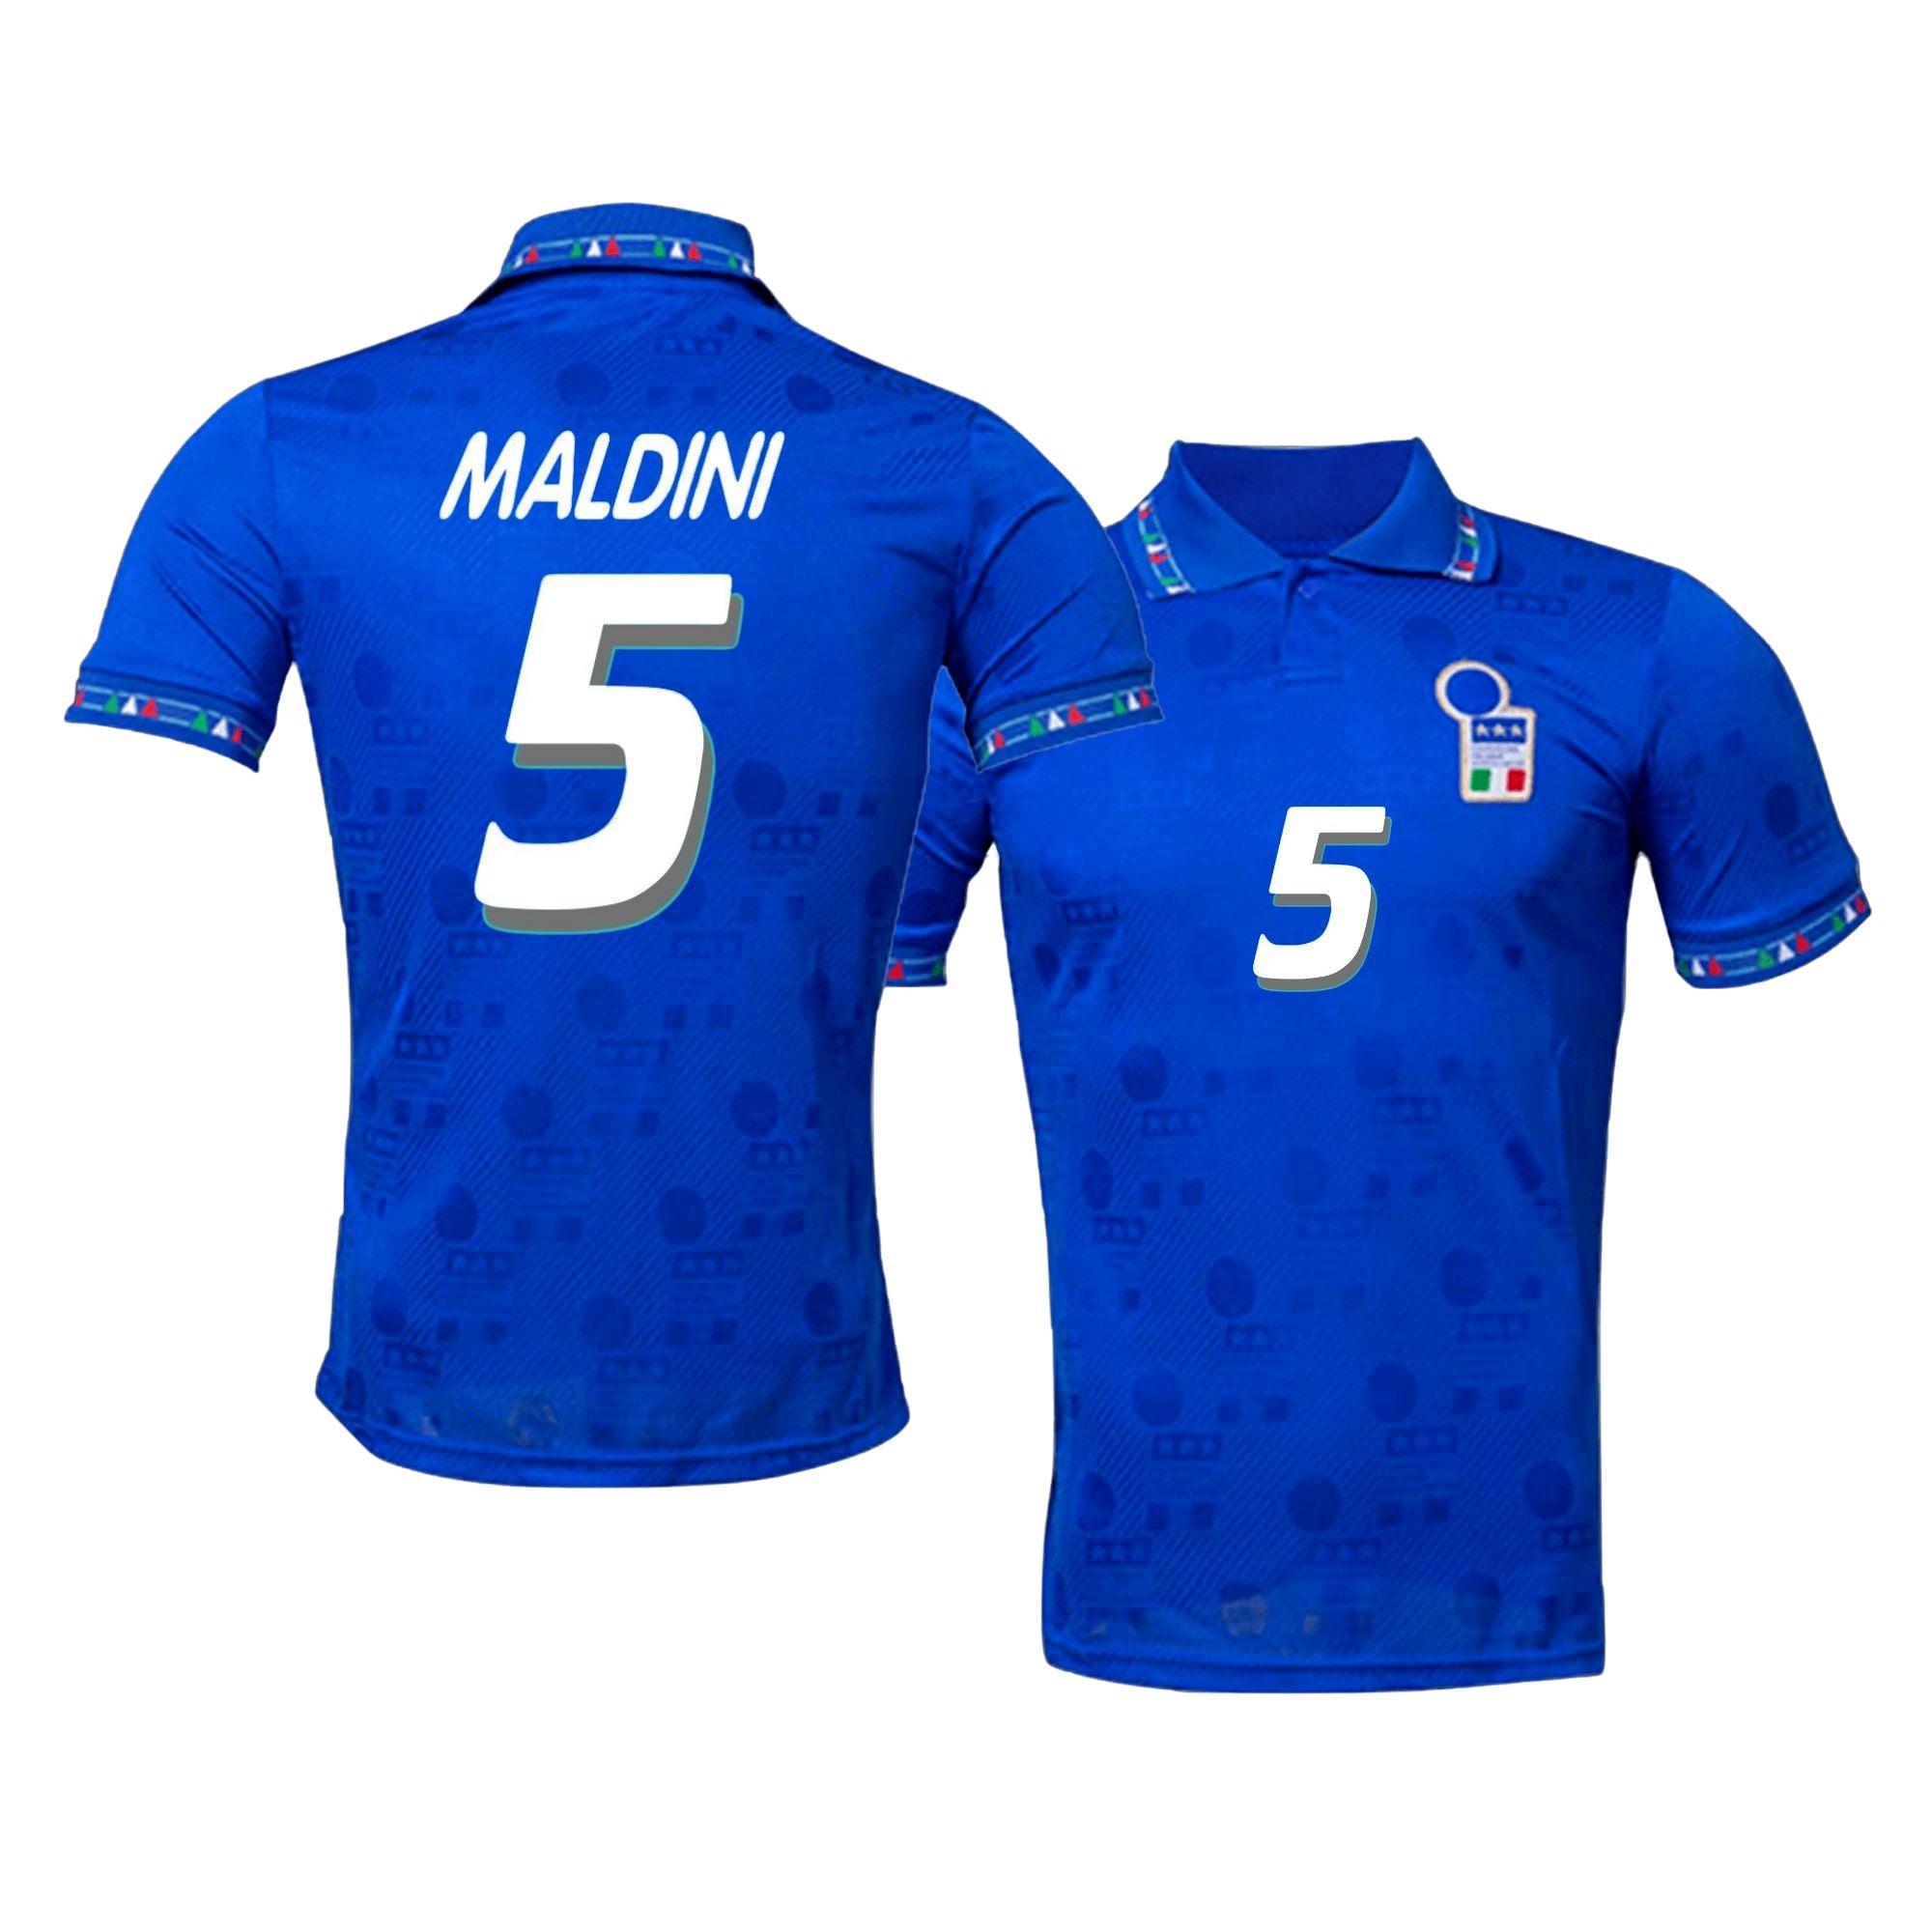 1994/95 Italy Home Jersey Maldini #5 - ITASPORT